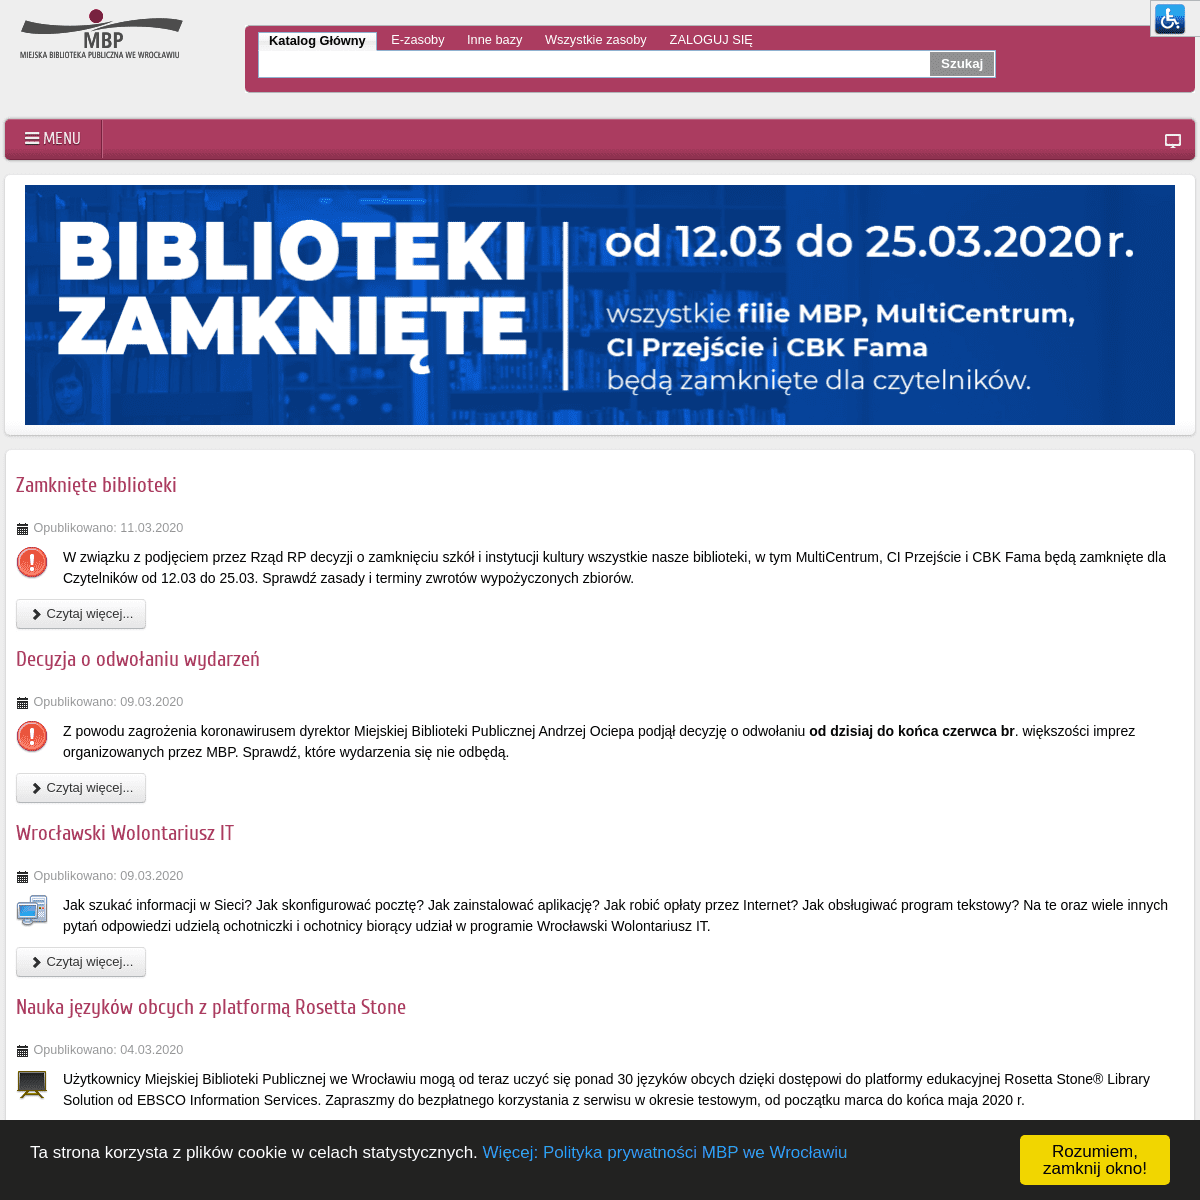 A complete backup of biblioteka.wroc.pl